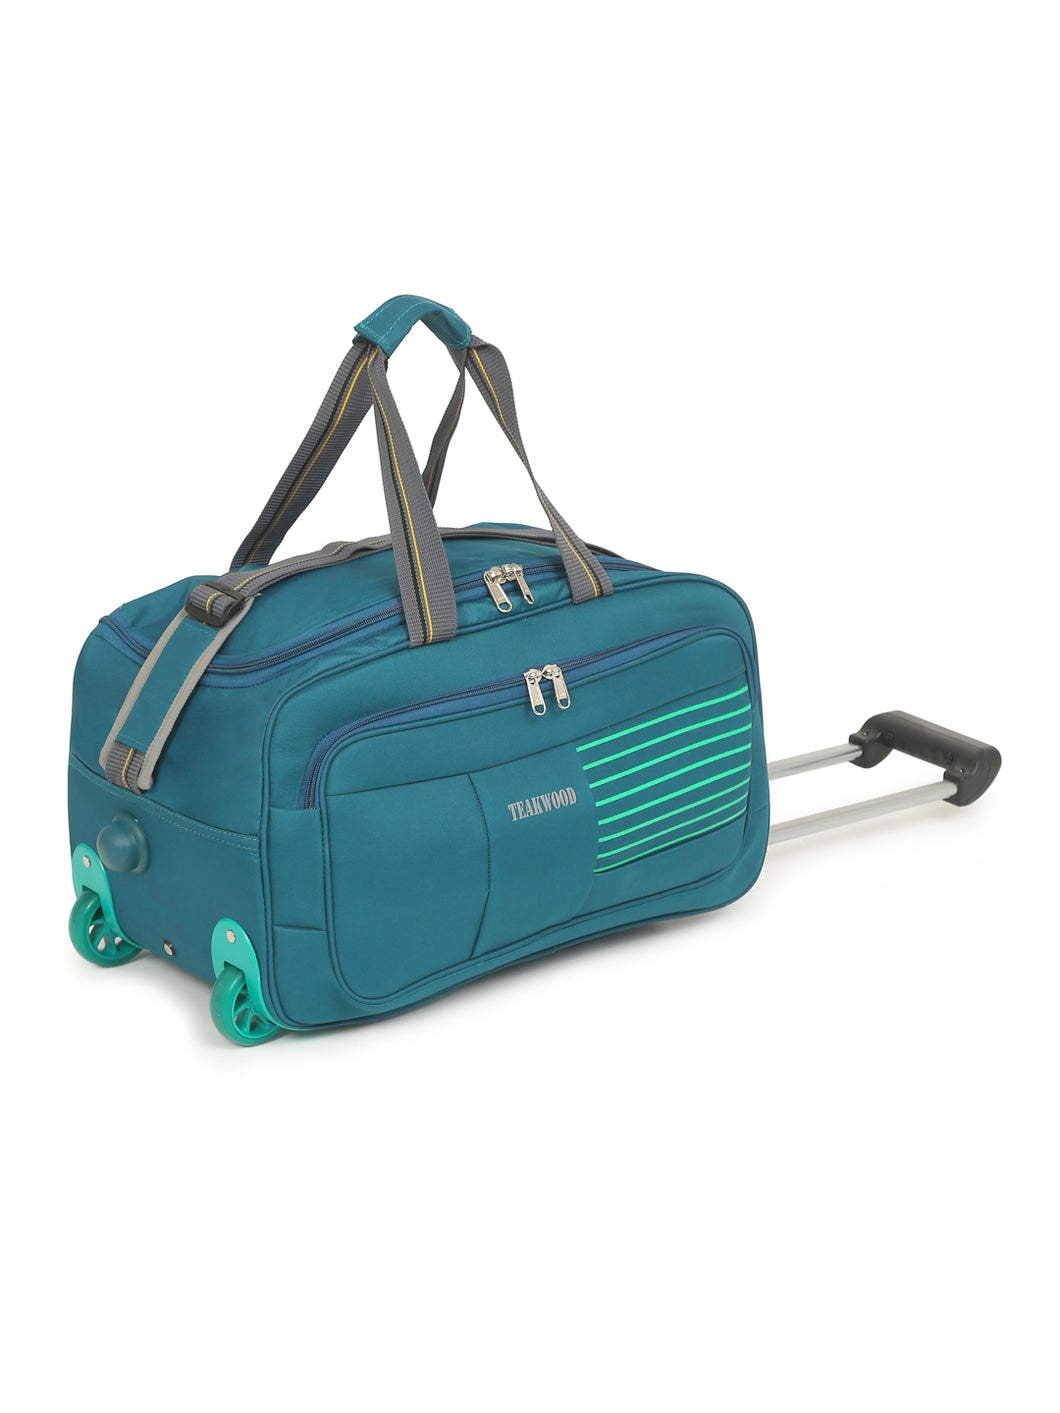 Teakwood Rolling Small Duffel Travel Bag (Teal)